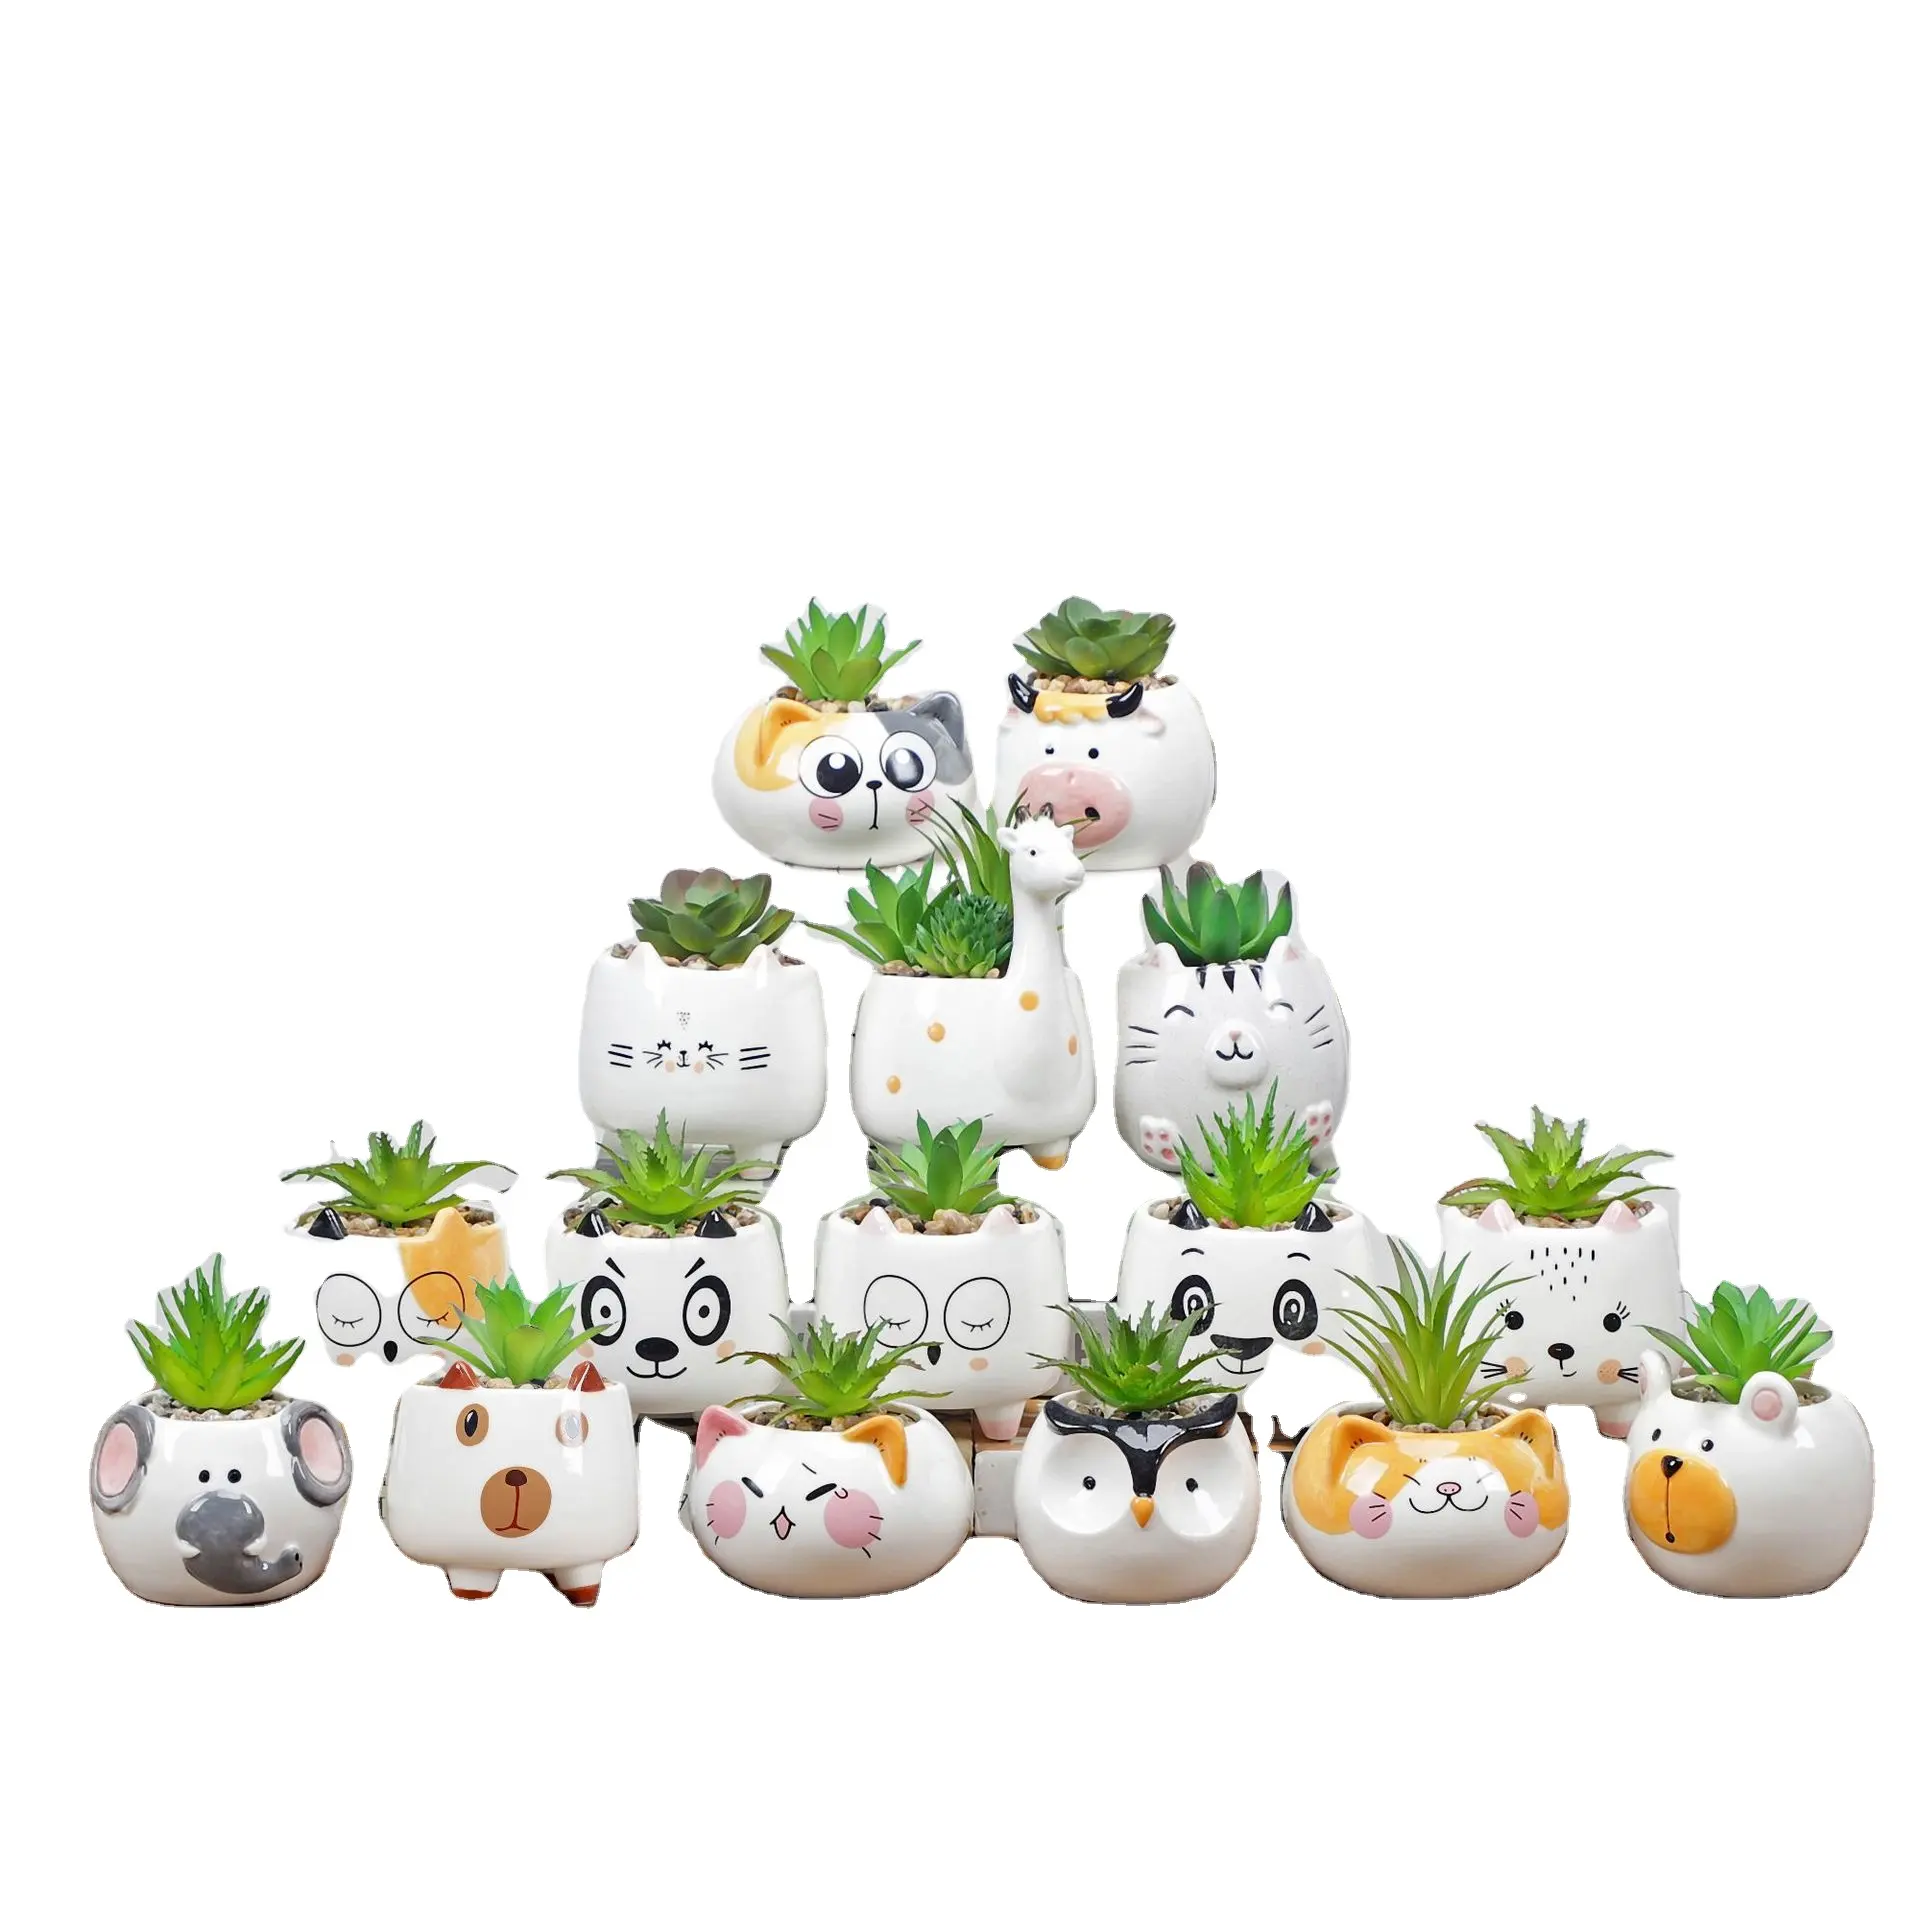 20 Design Cute Animal Ceramic Planter Mini Garden Planters Home Decor Succulent Cactus Plant Pots